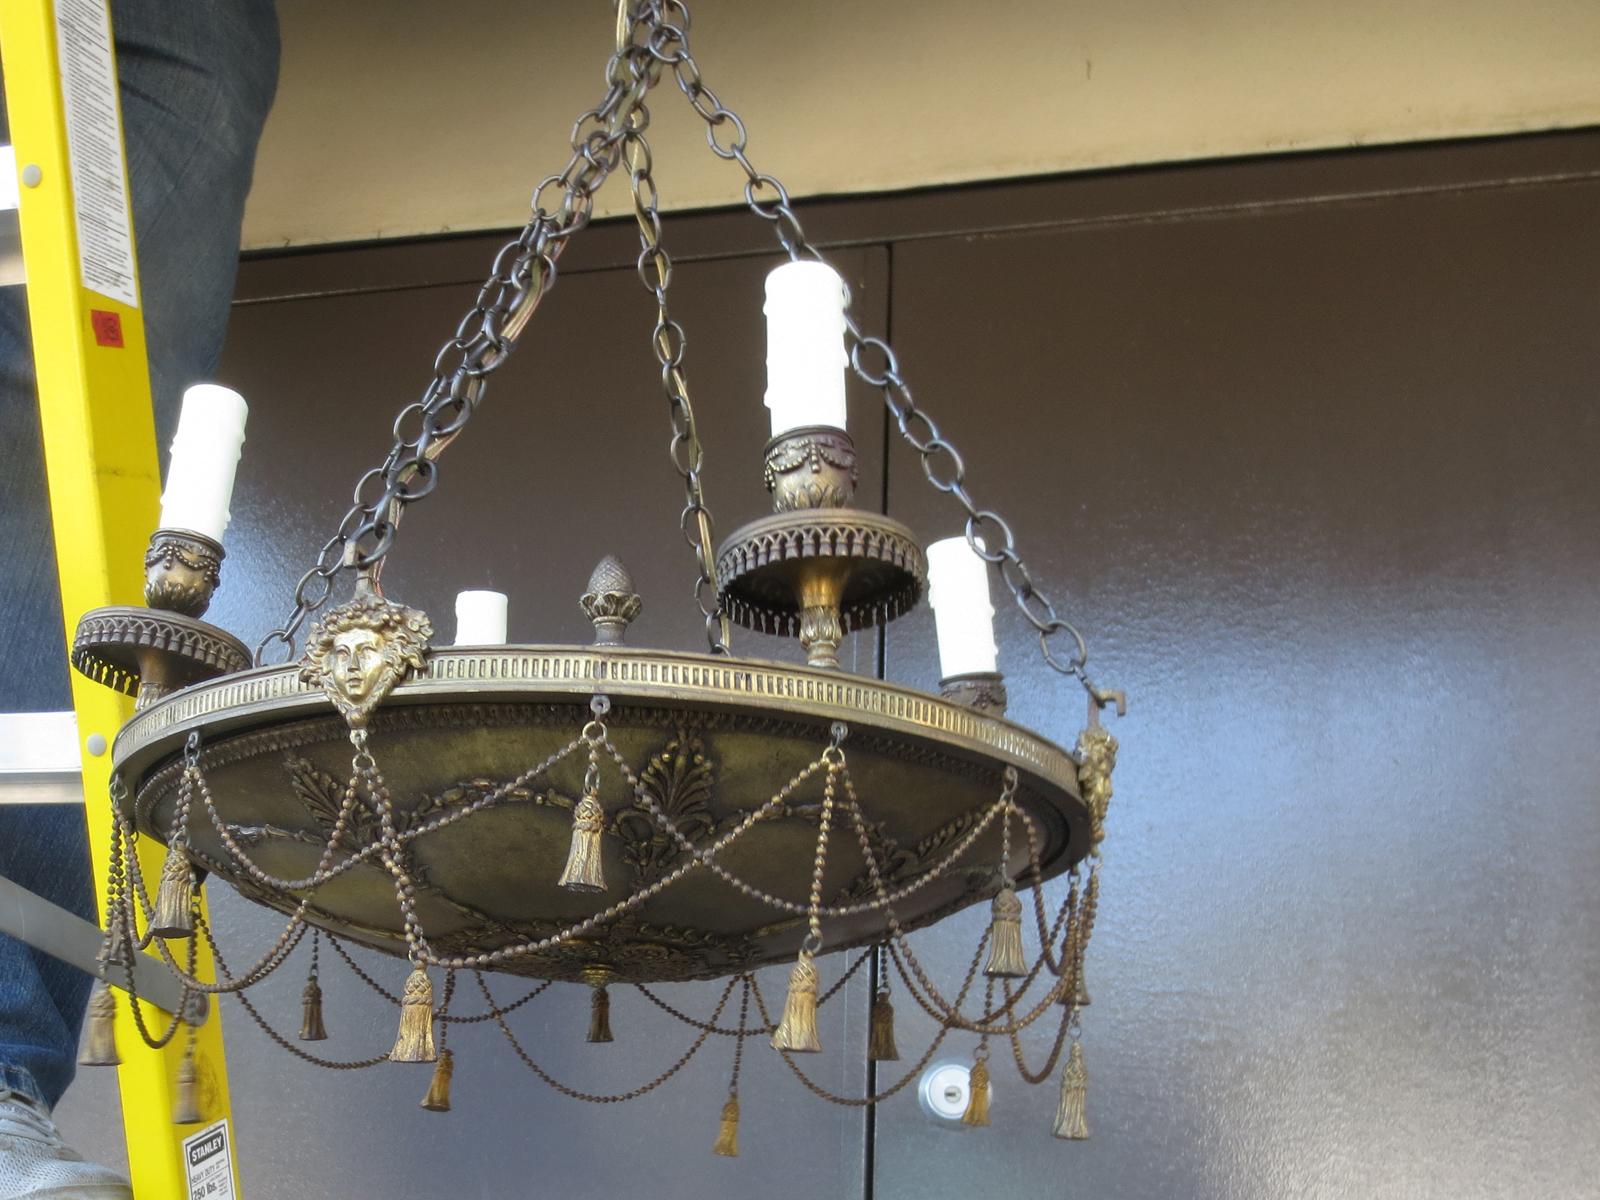 19th-20th century Empire style bronze chandelier
New wiring.